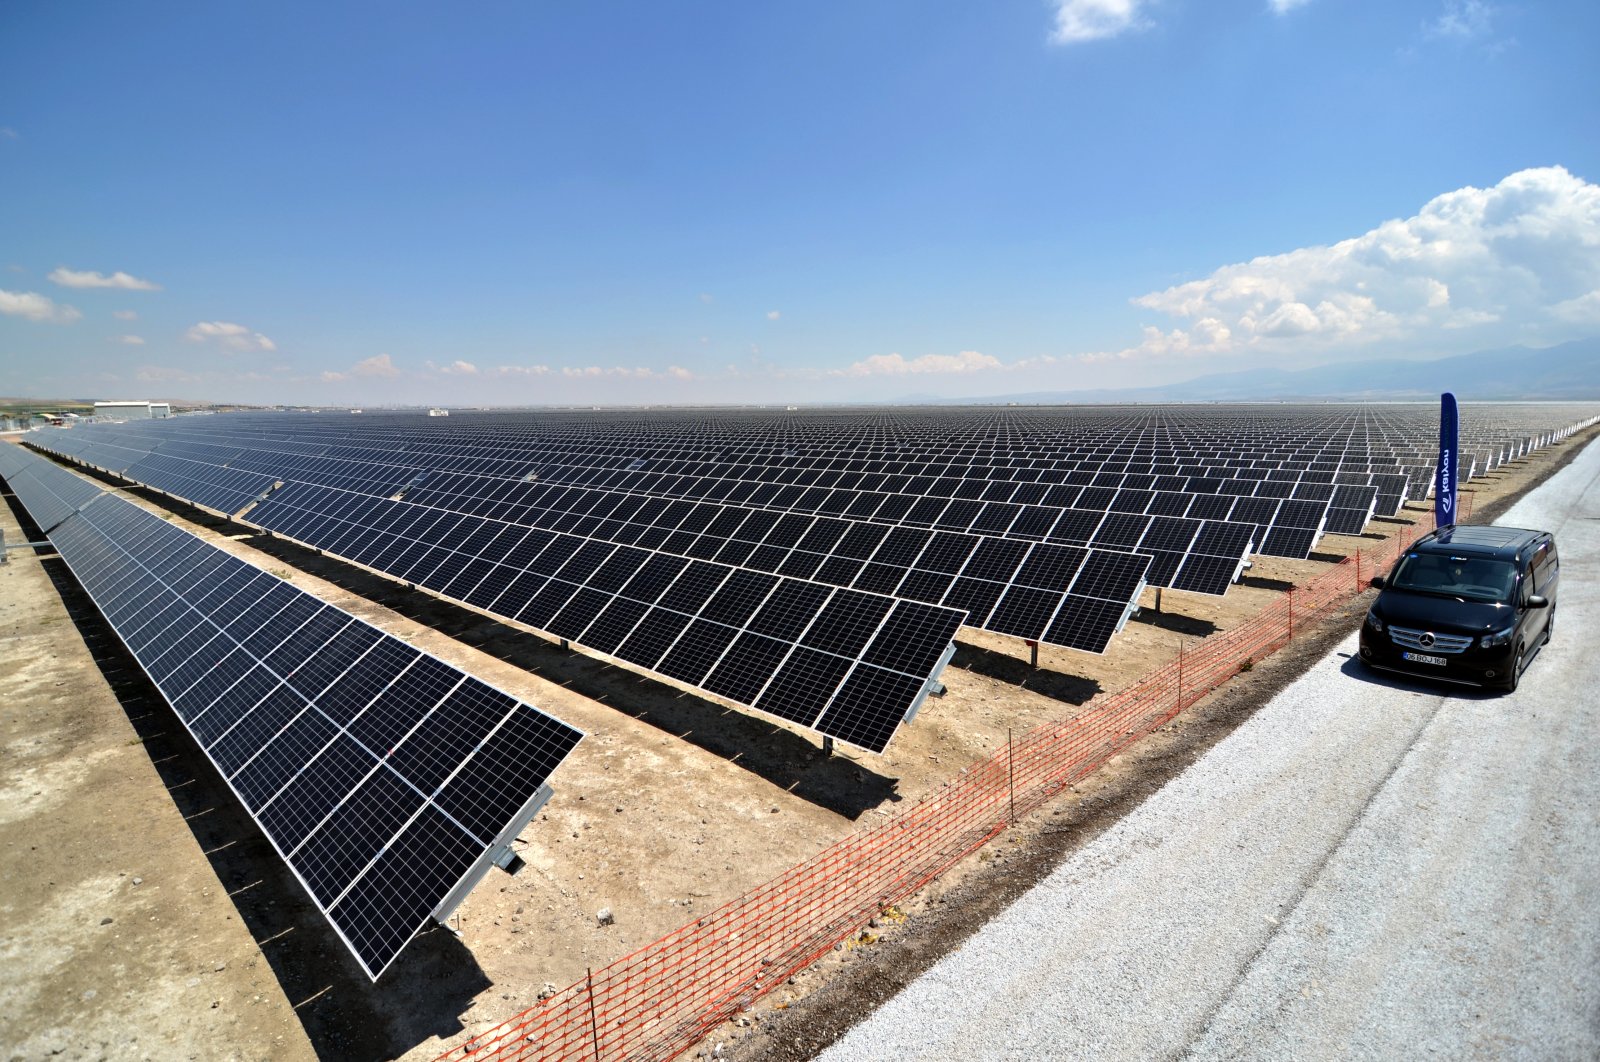 Solar panels are seen at the Karapınar Solar Power Plant in the central Anatolian province of Konya, Turkey, June 11, 2021. (AA Photo)